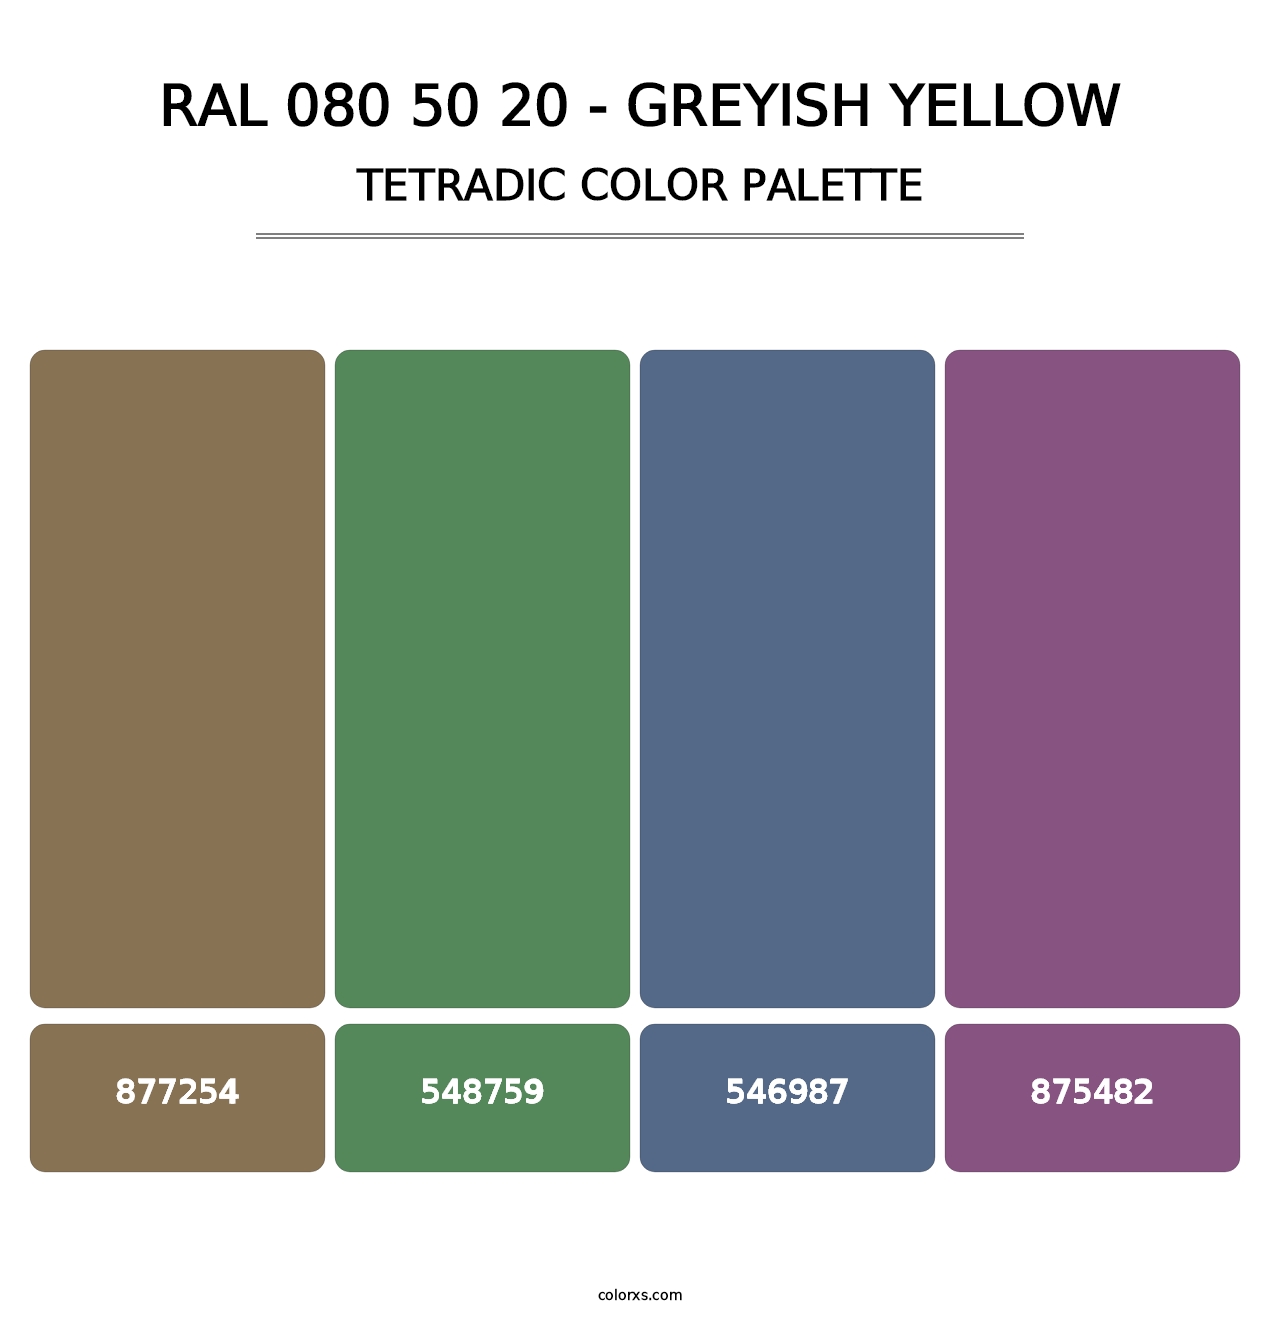 RAL 080 50 20 - Greyish Yellow - Tetradic Color Palette